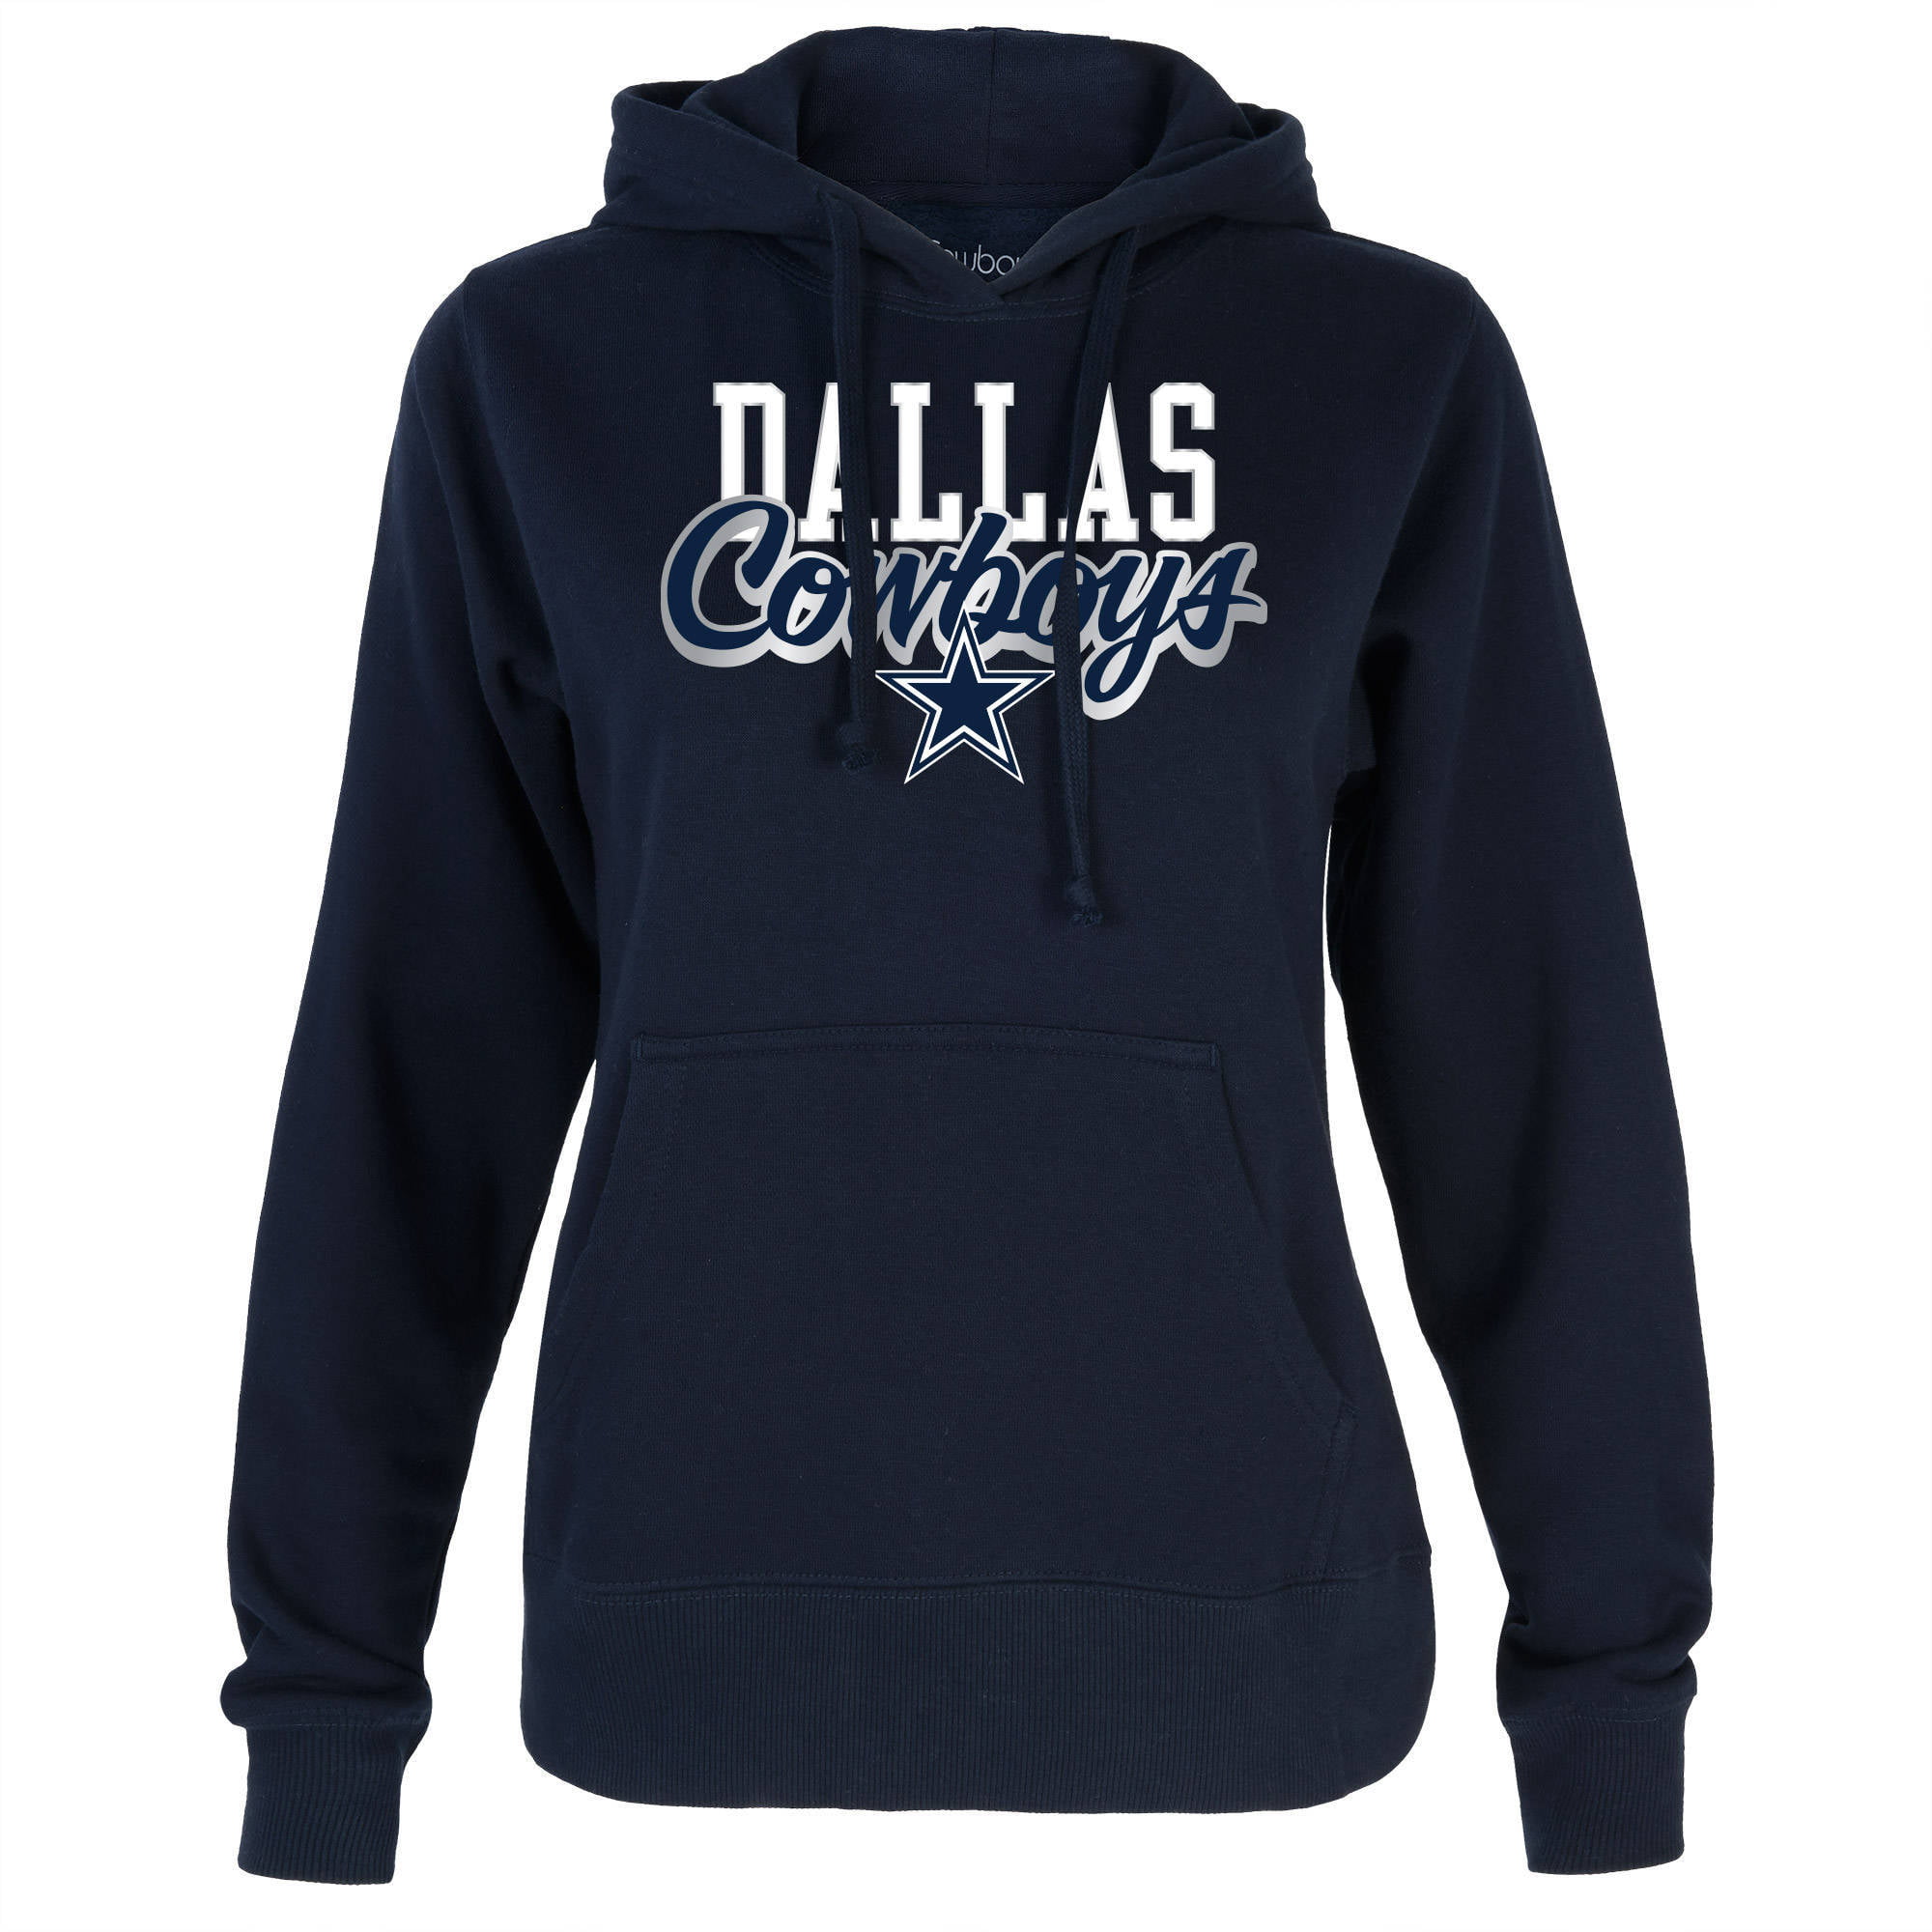 NFL Dallas Cowboys Womens Fleece Hoodies - Walmart.com